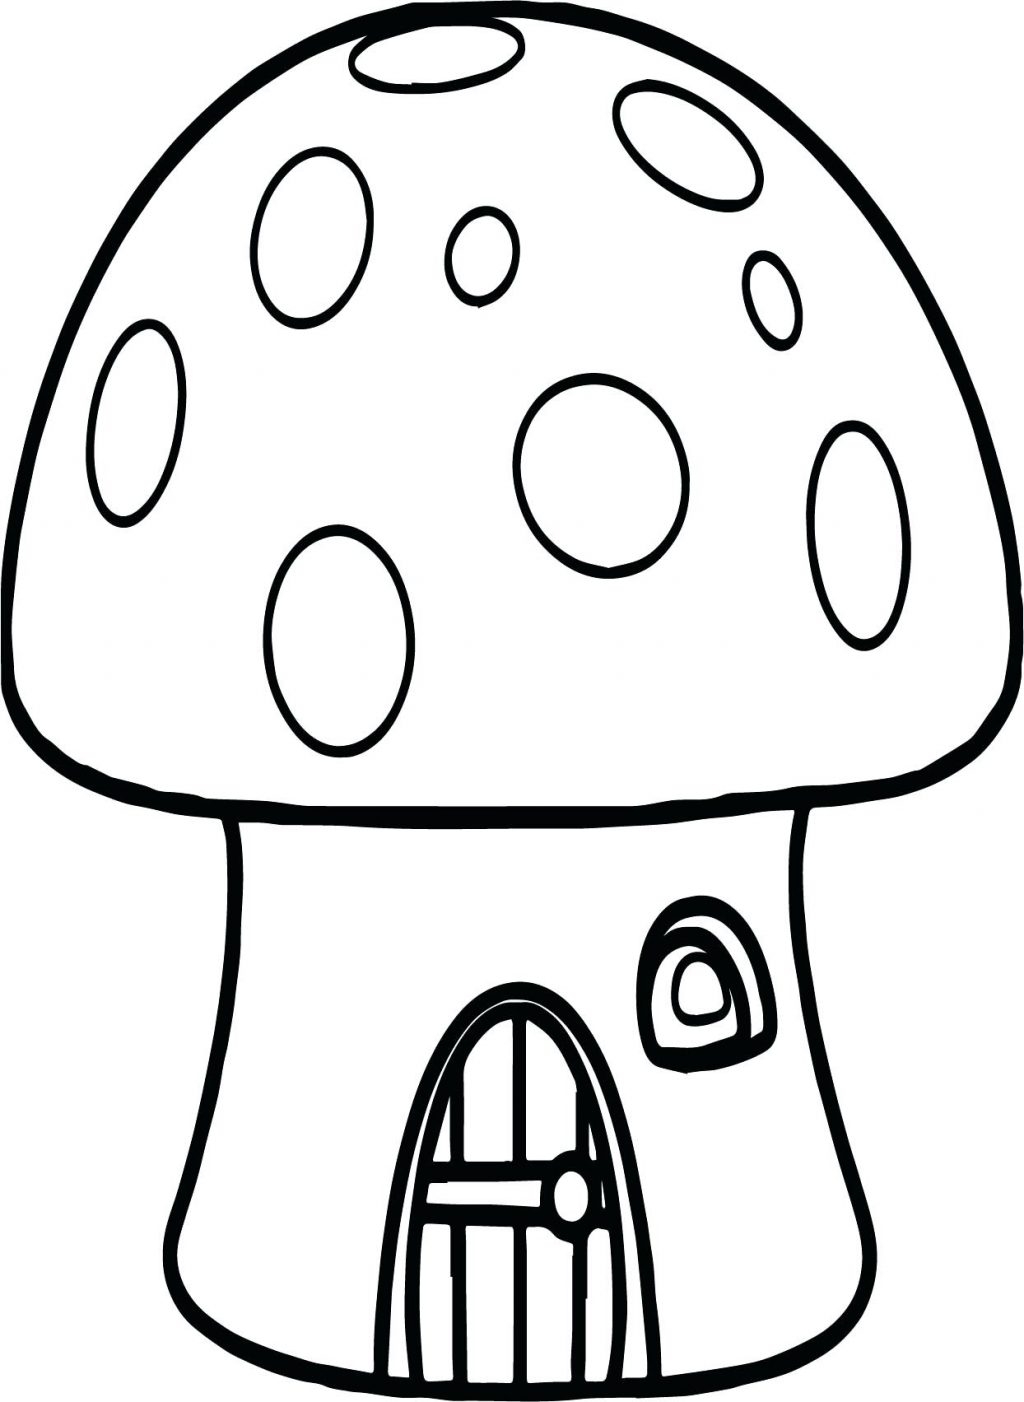 Mushroom House Coloring Page at Free printable